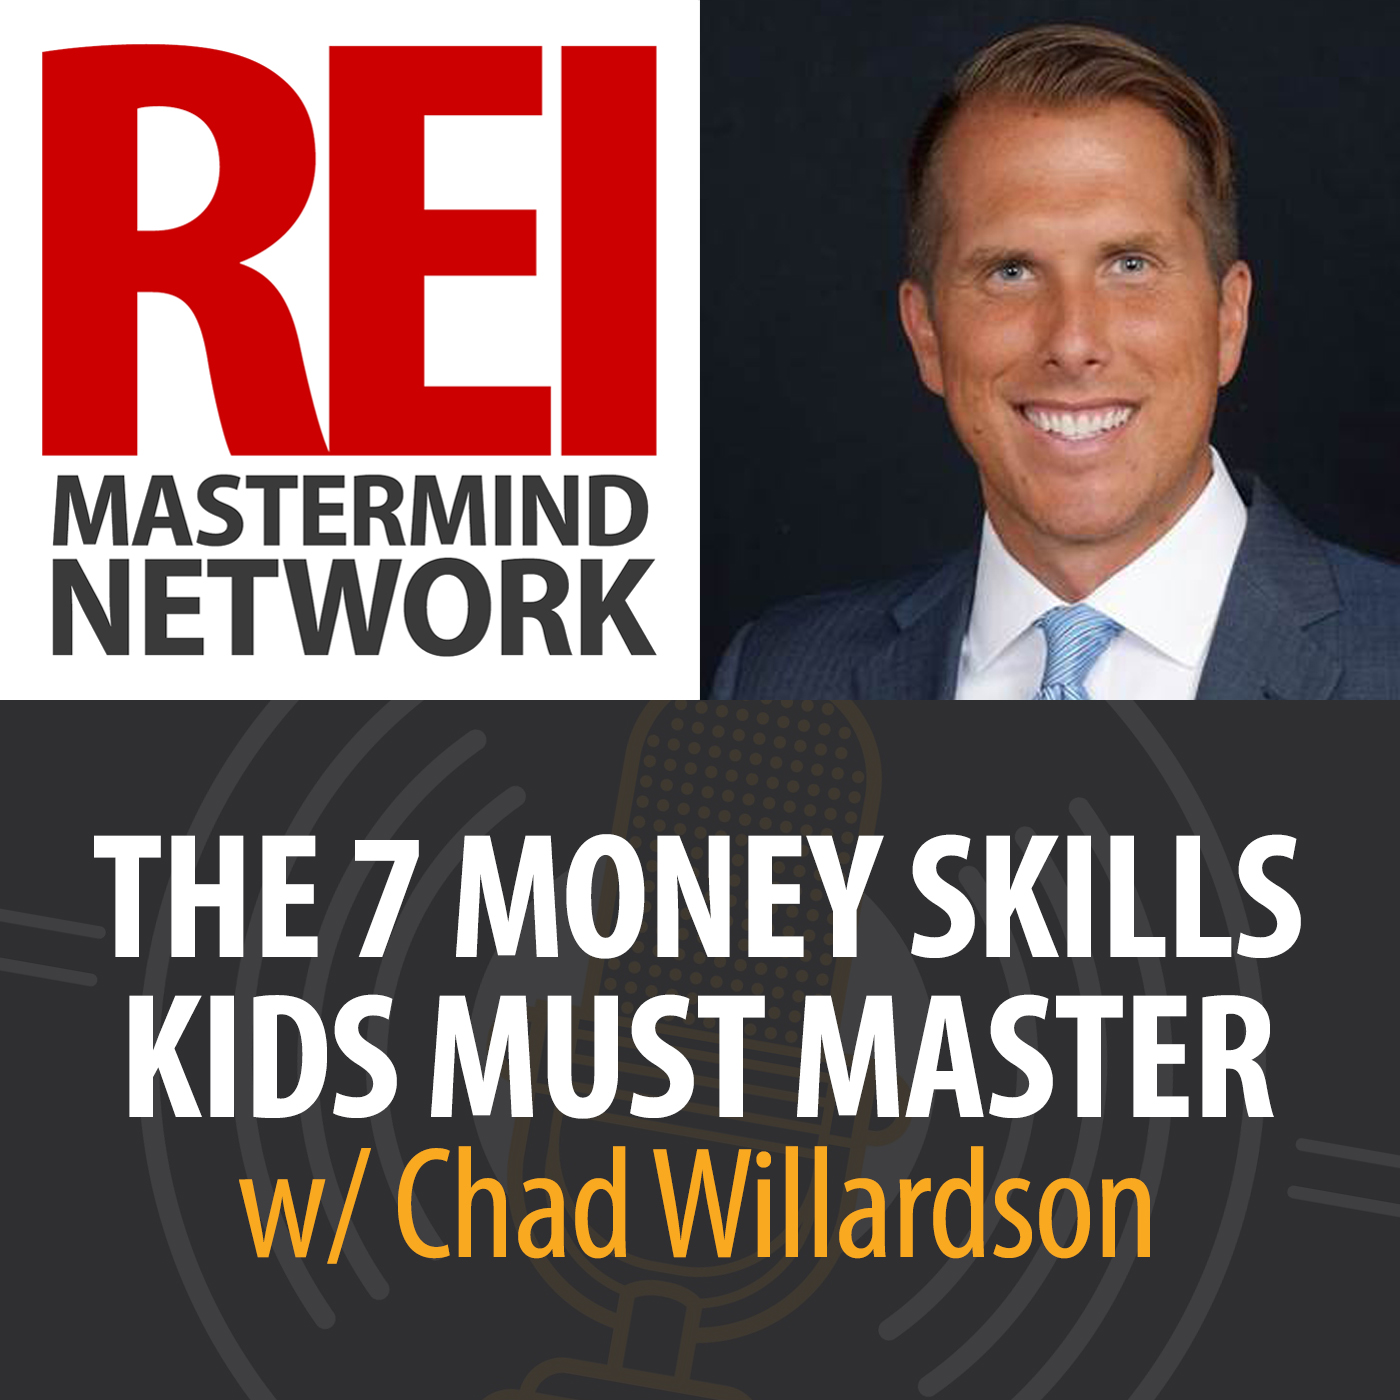 The 7 Money Skills Kids Must Master with Chad Willardson